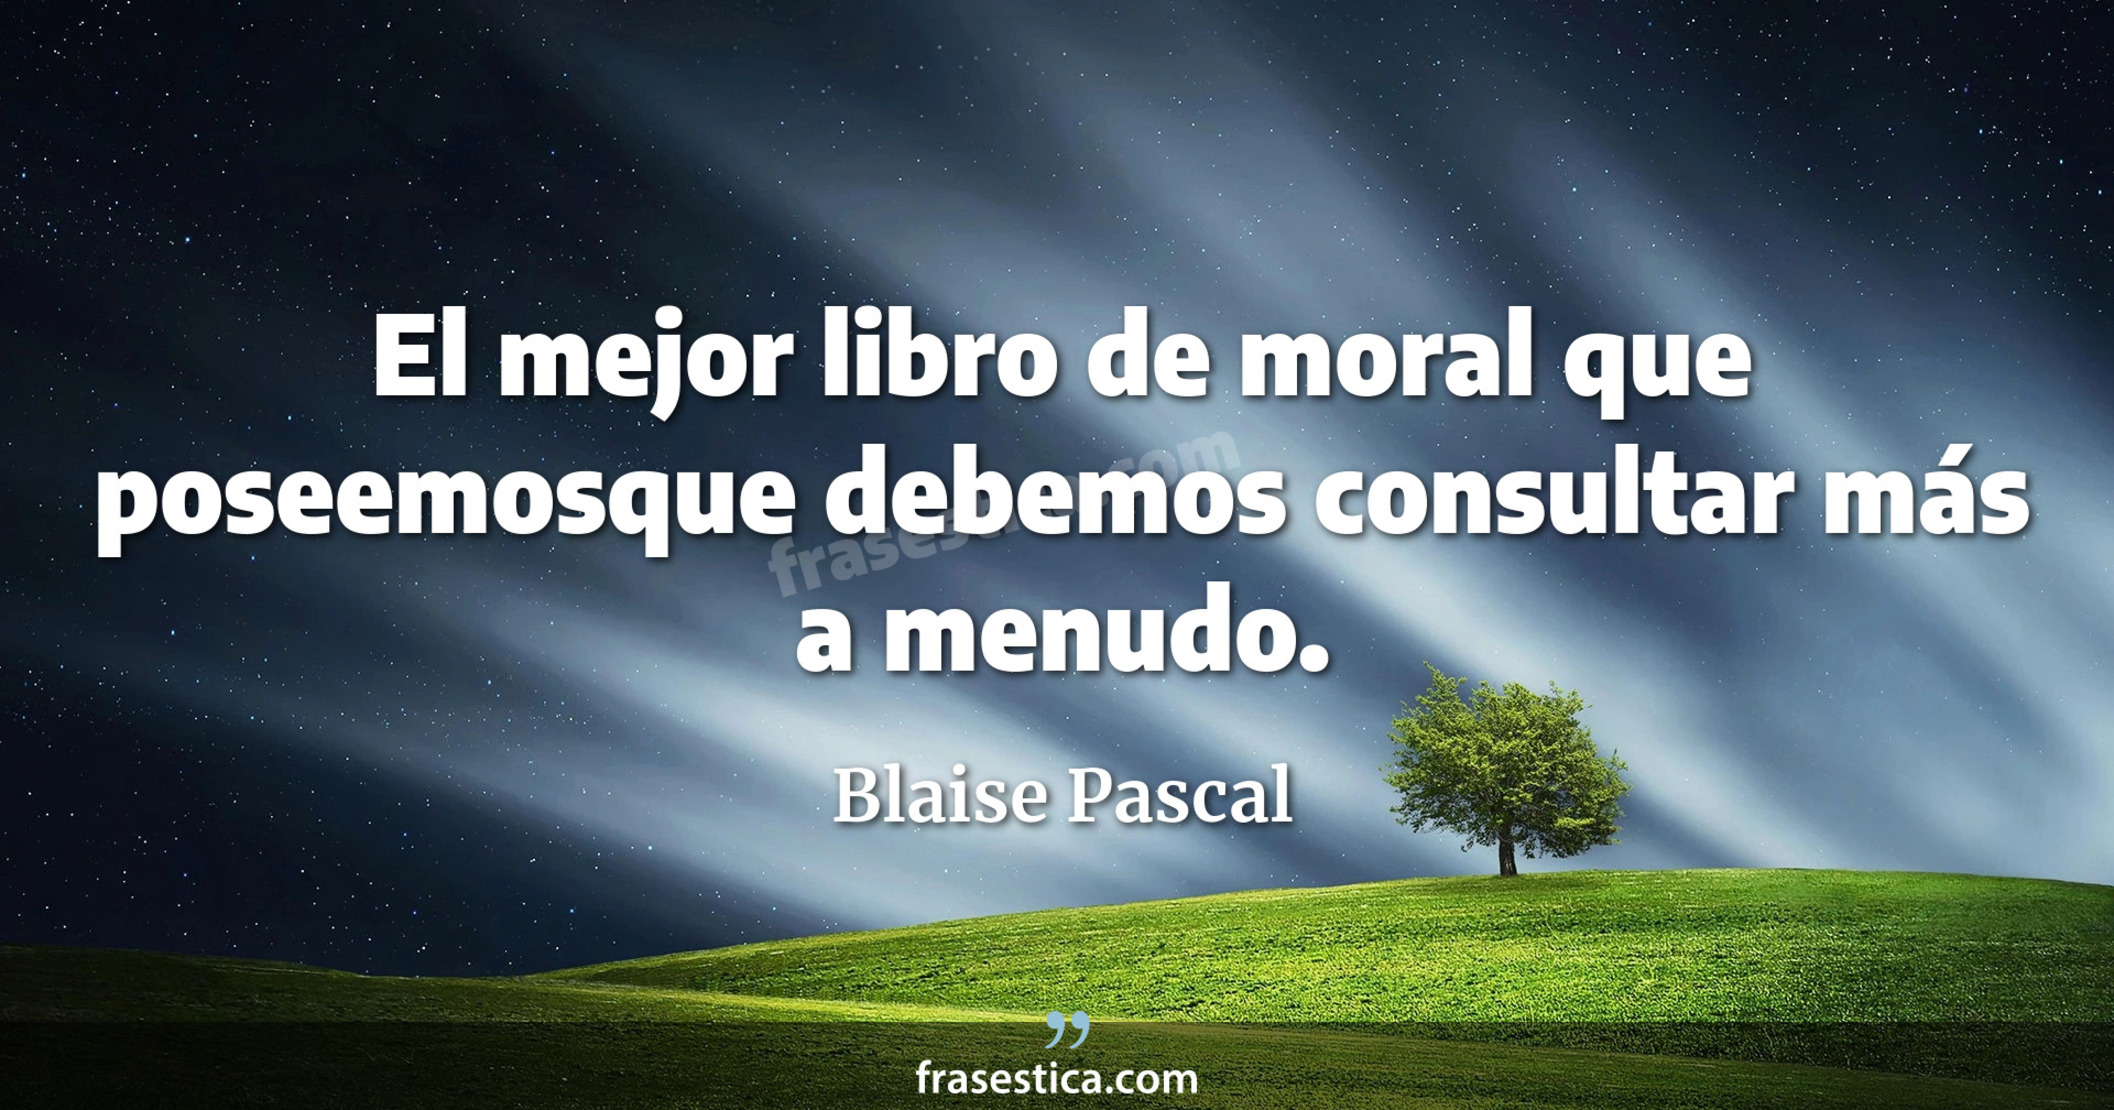 El mejor libro de moral que poseemosque debemos consultar más a menudo. - Blaise Pascal